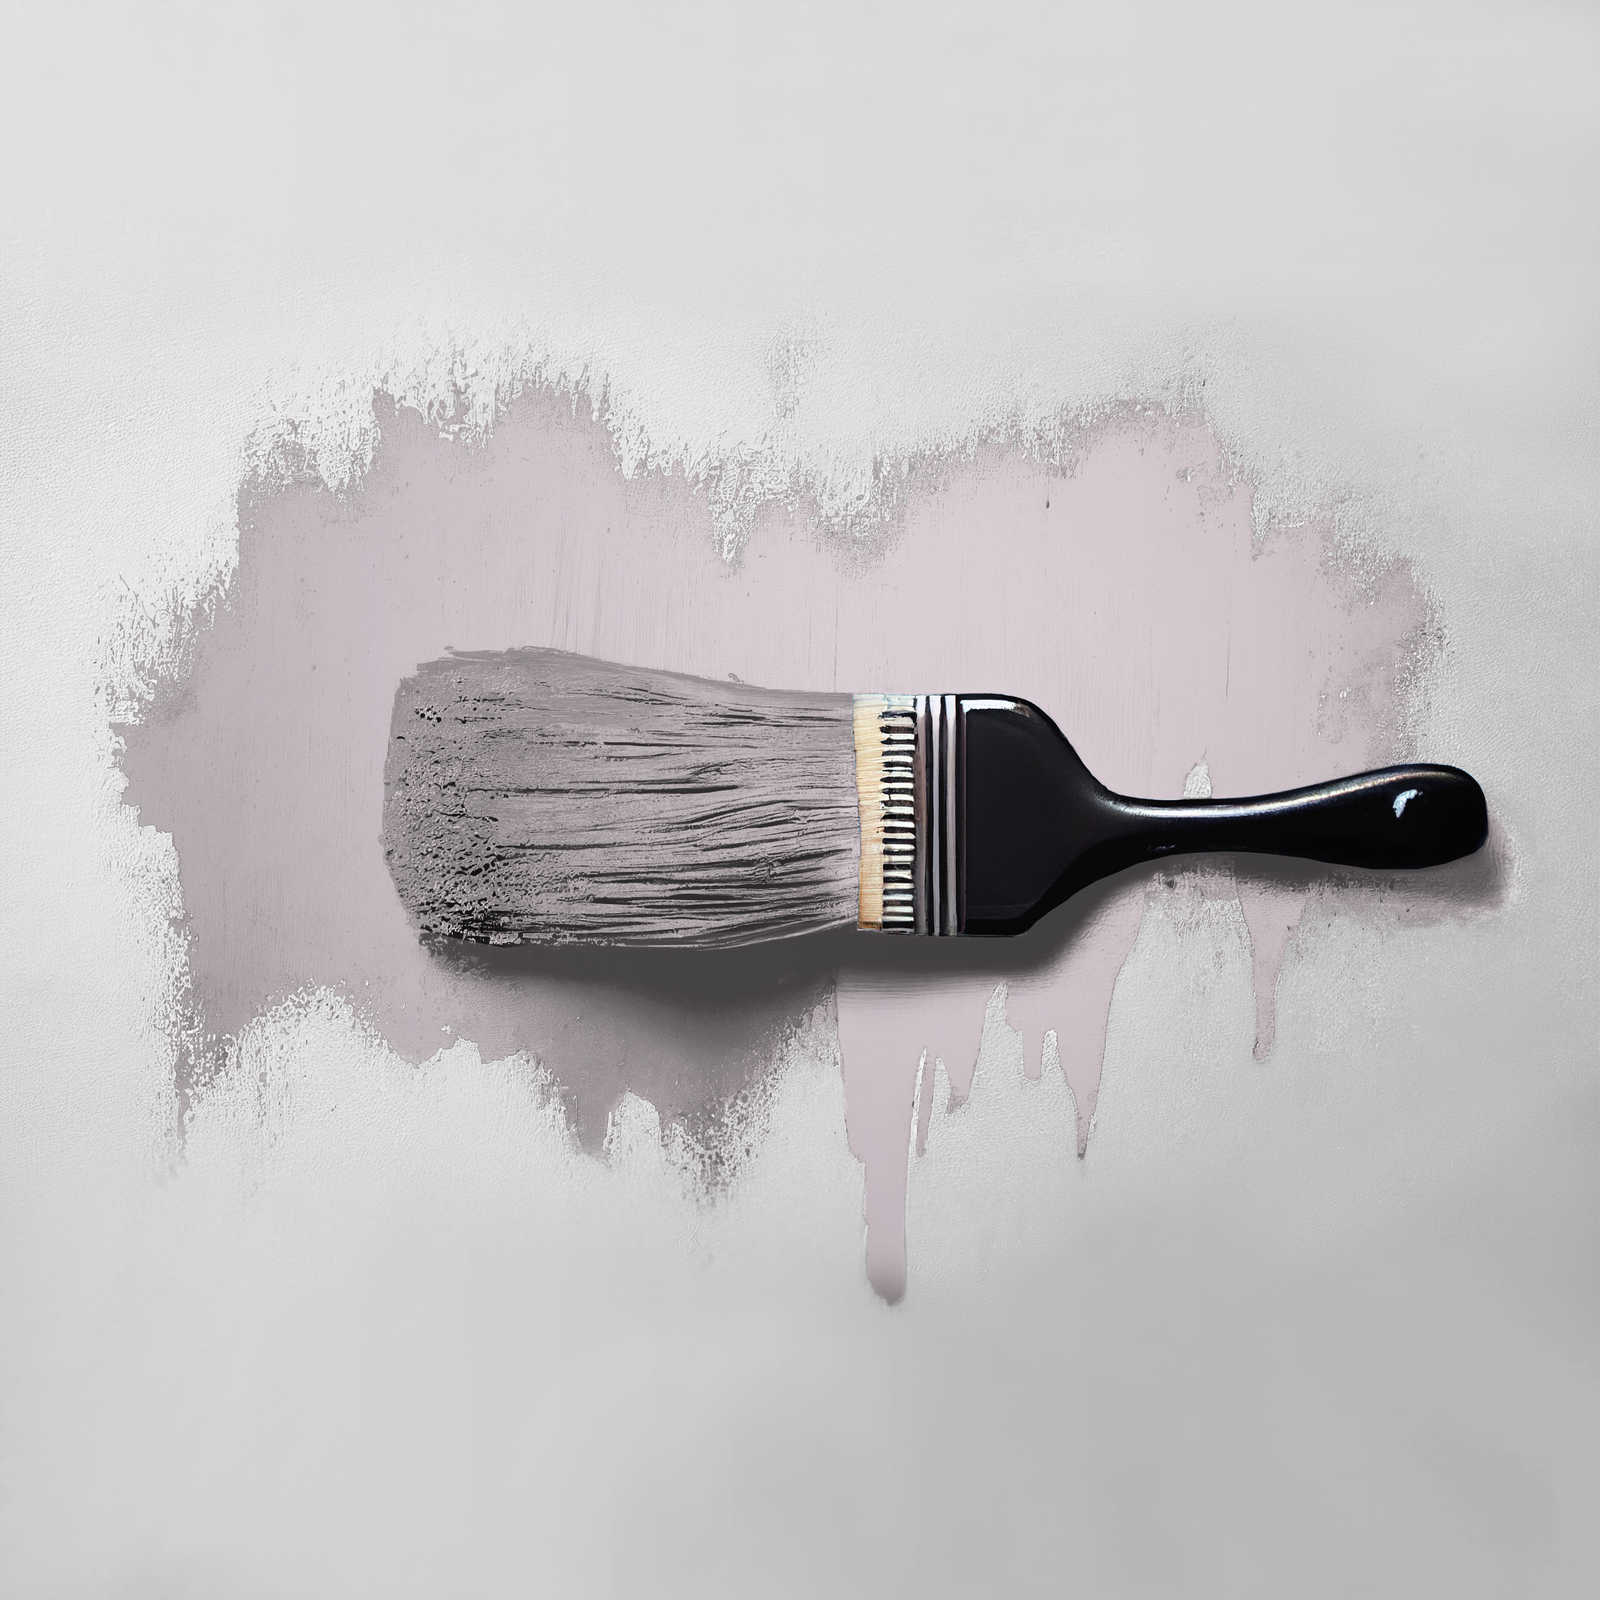             Pittura murale TCK2004 »Leafy Lavender« in tonalità lavanda fresca – 2,5 litri
        